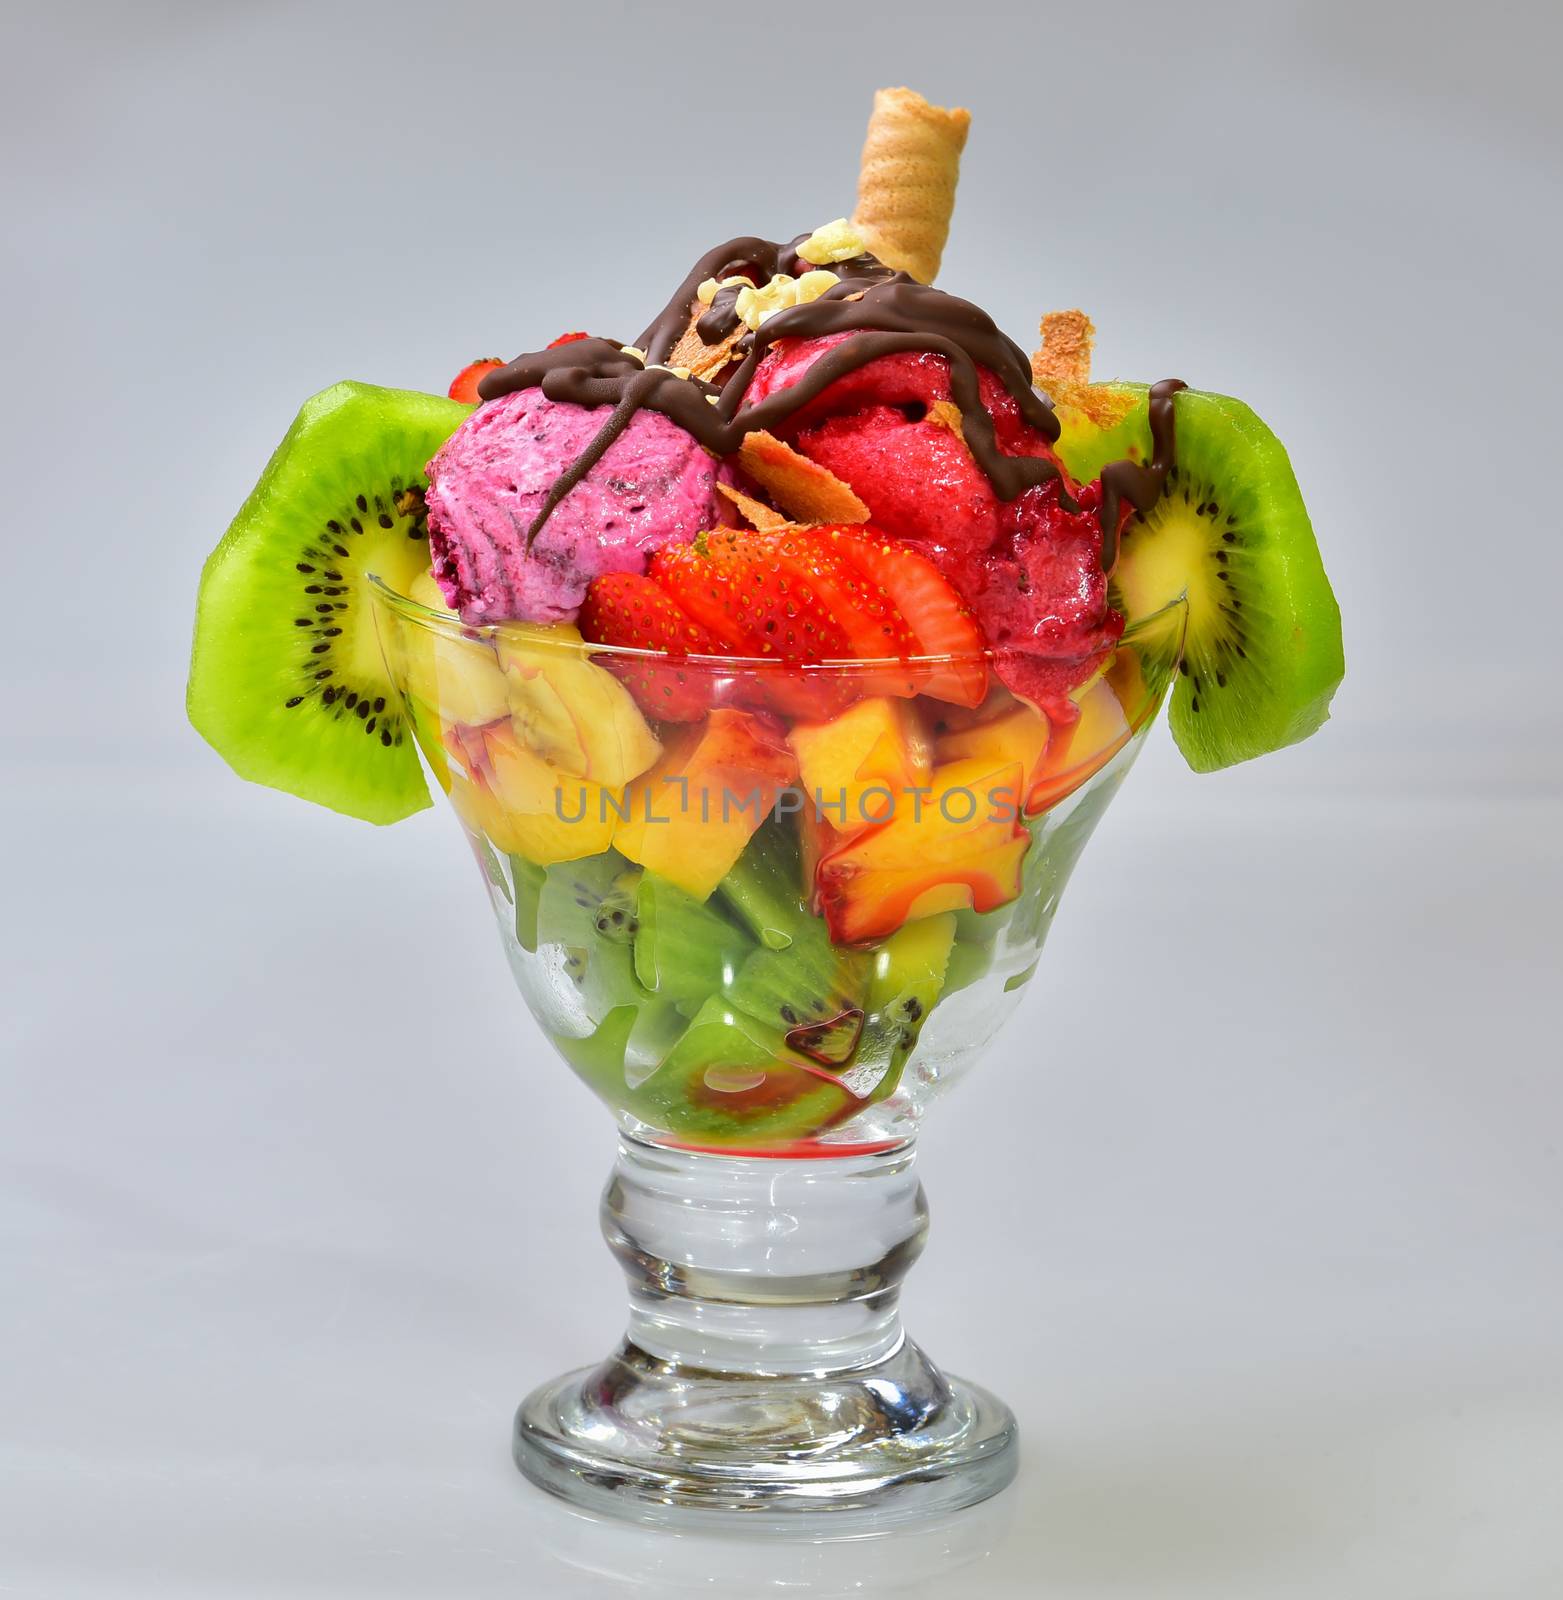 fruit,chocolate and ice cream